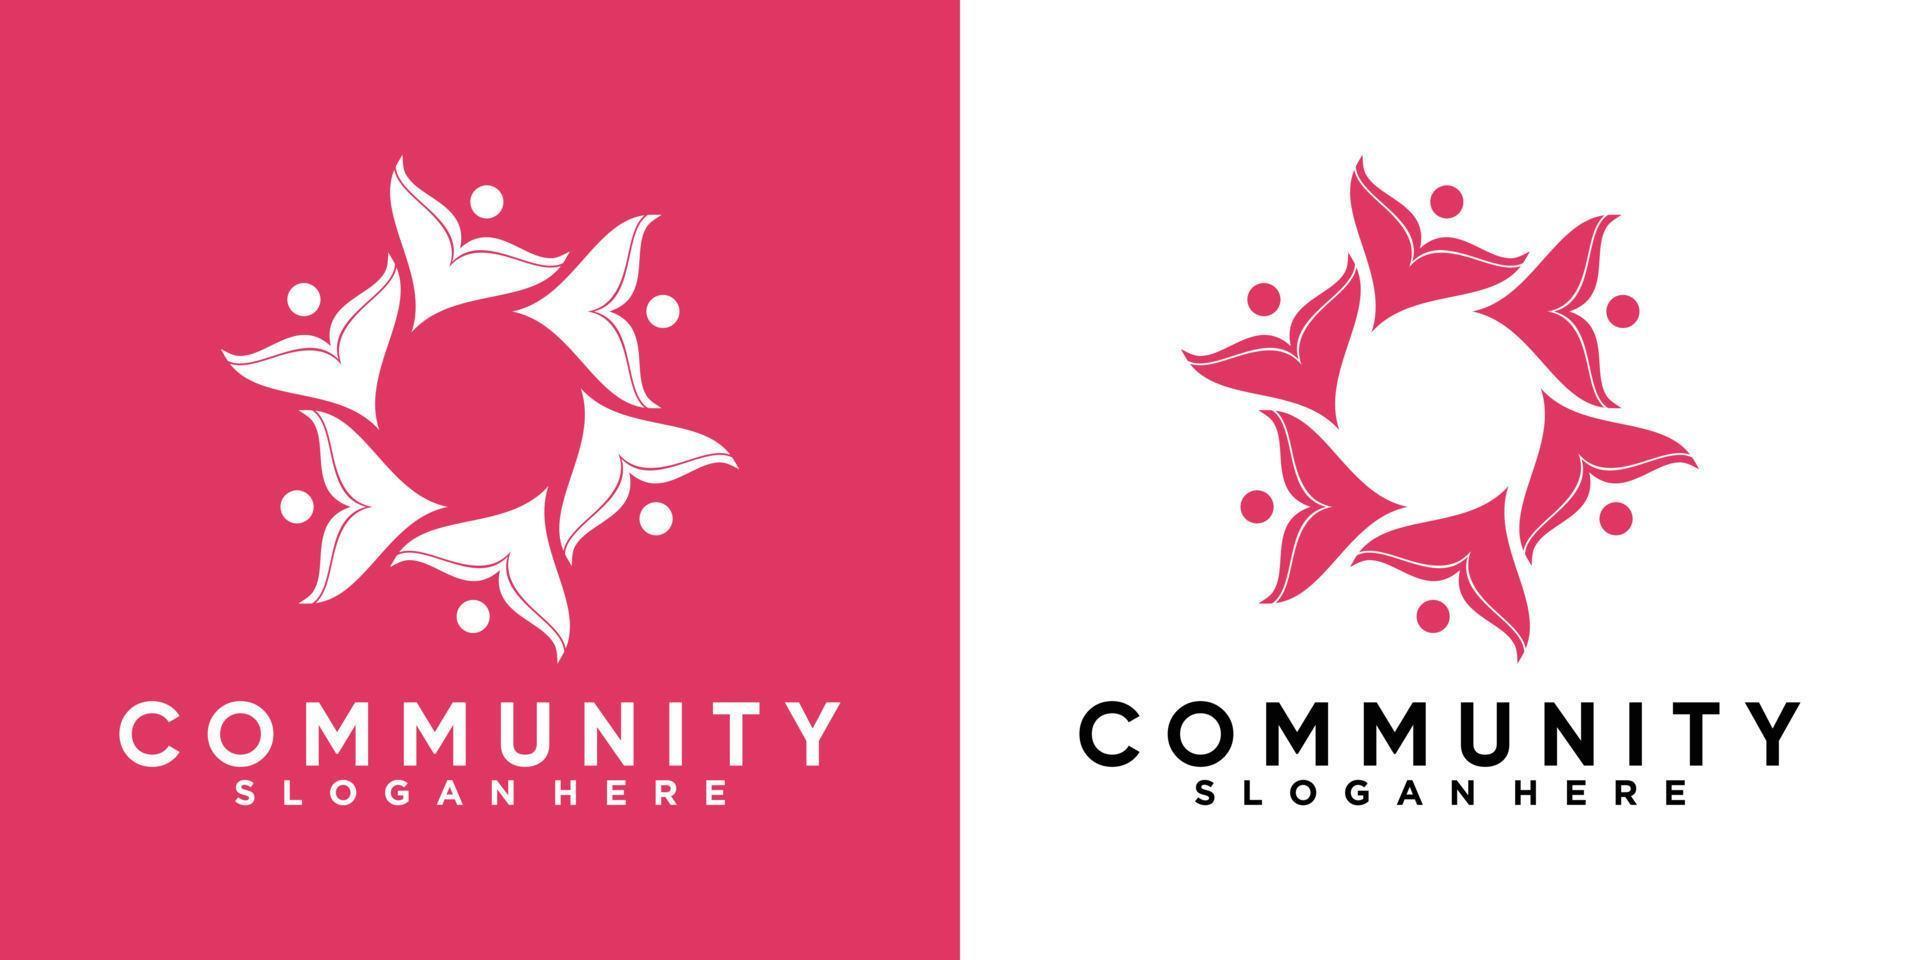 community logo design with creative concept vector